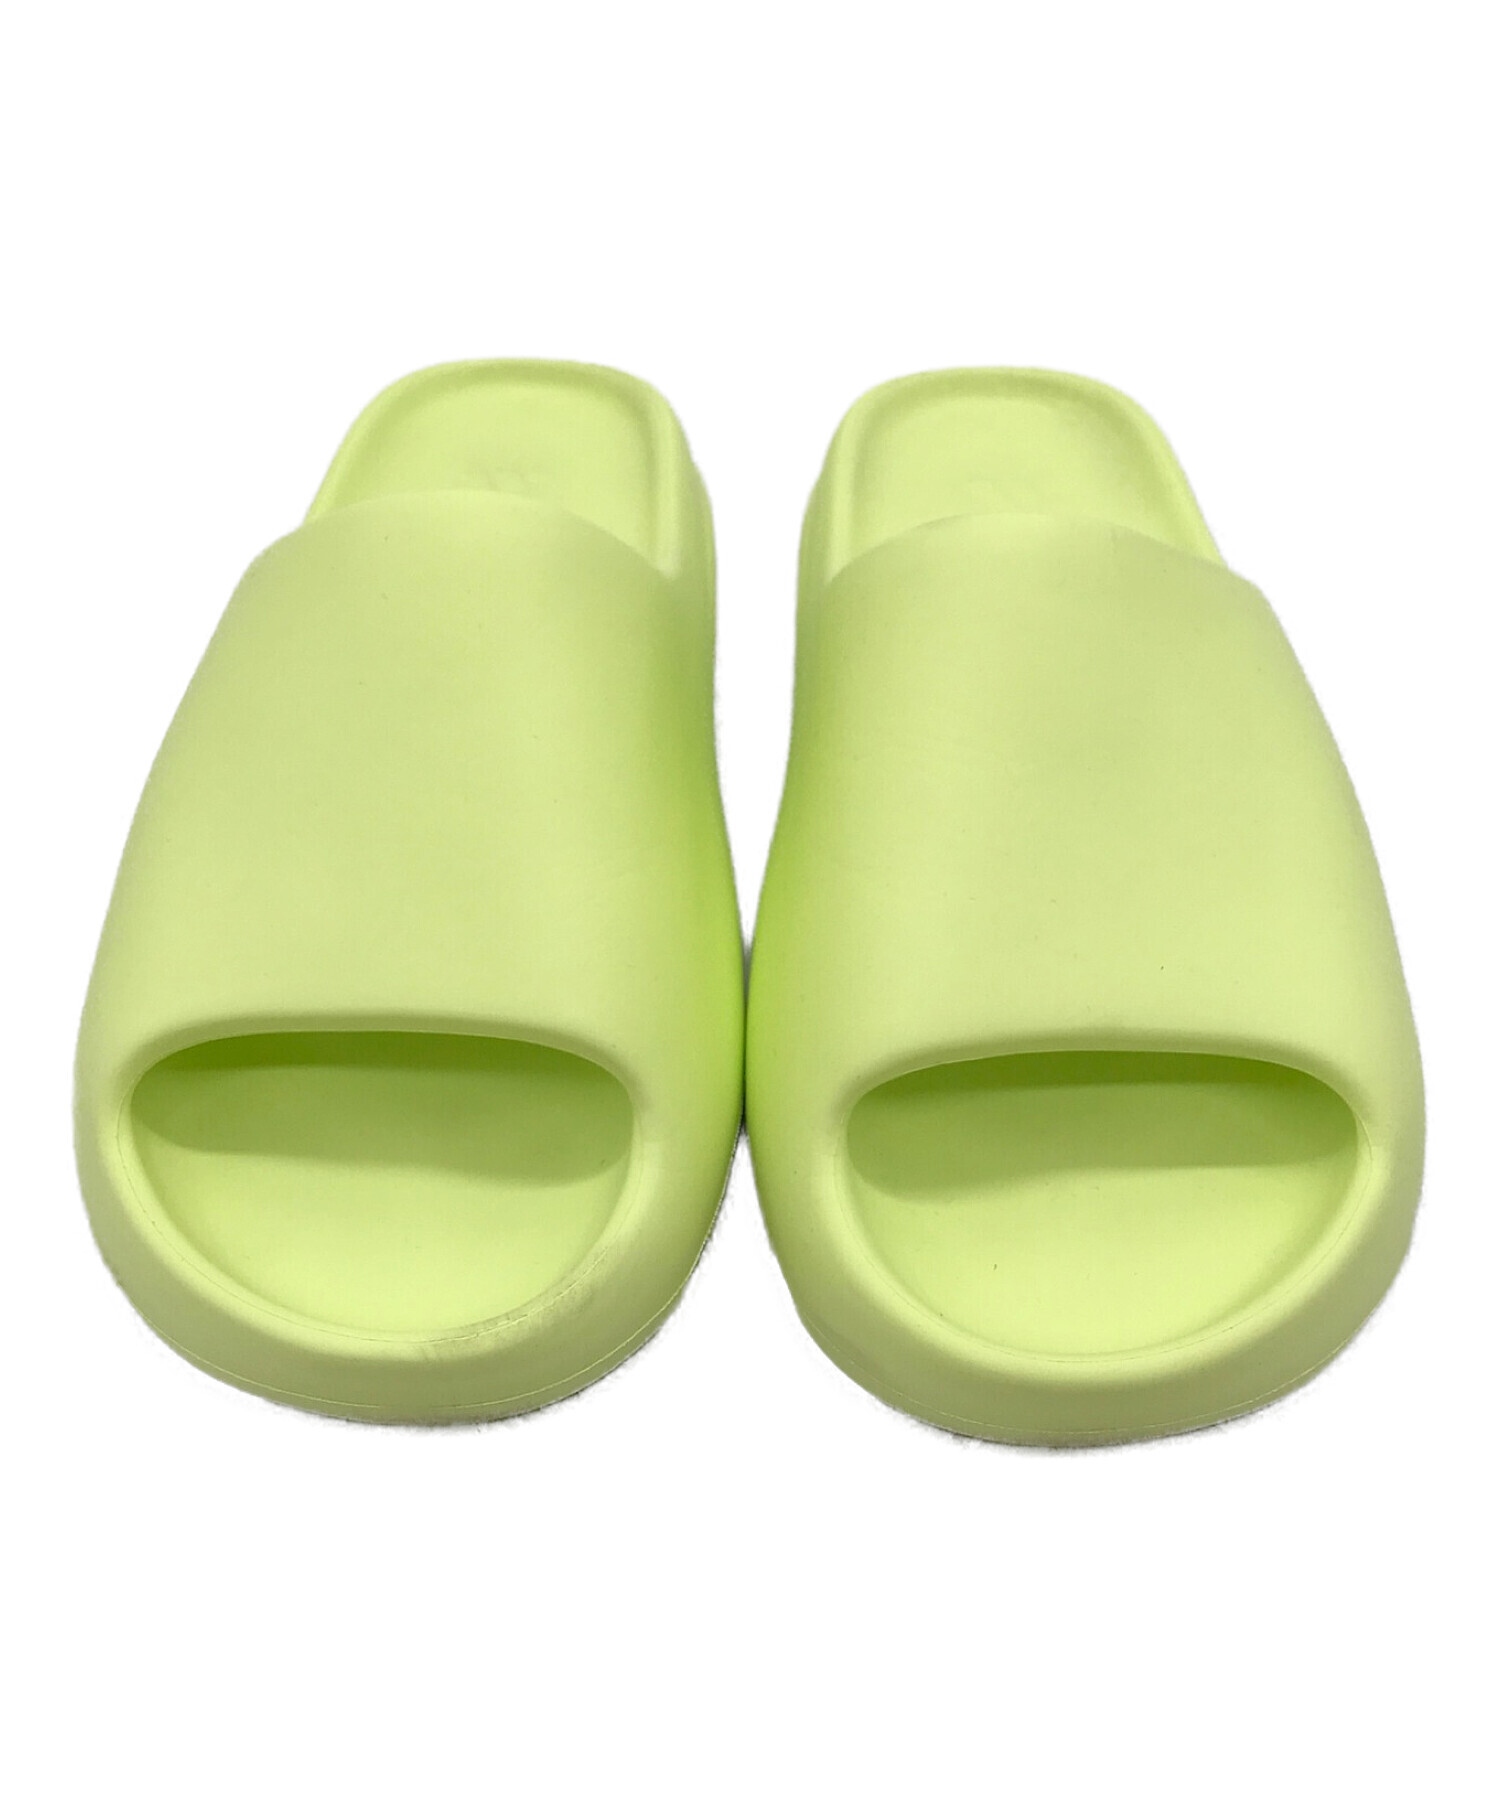 adidas (アディダス) イージー スライドサンダル 黄緑 サイズ:27.5